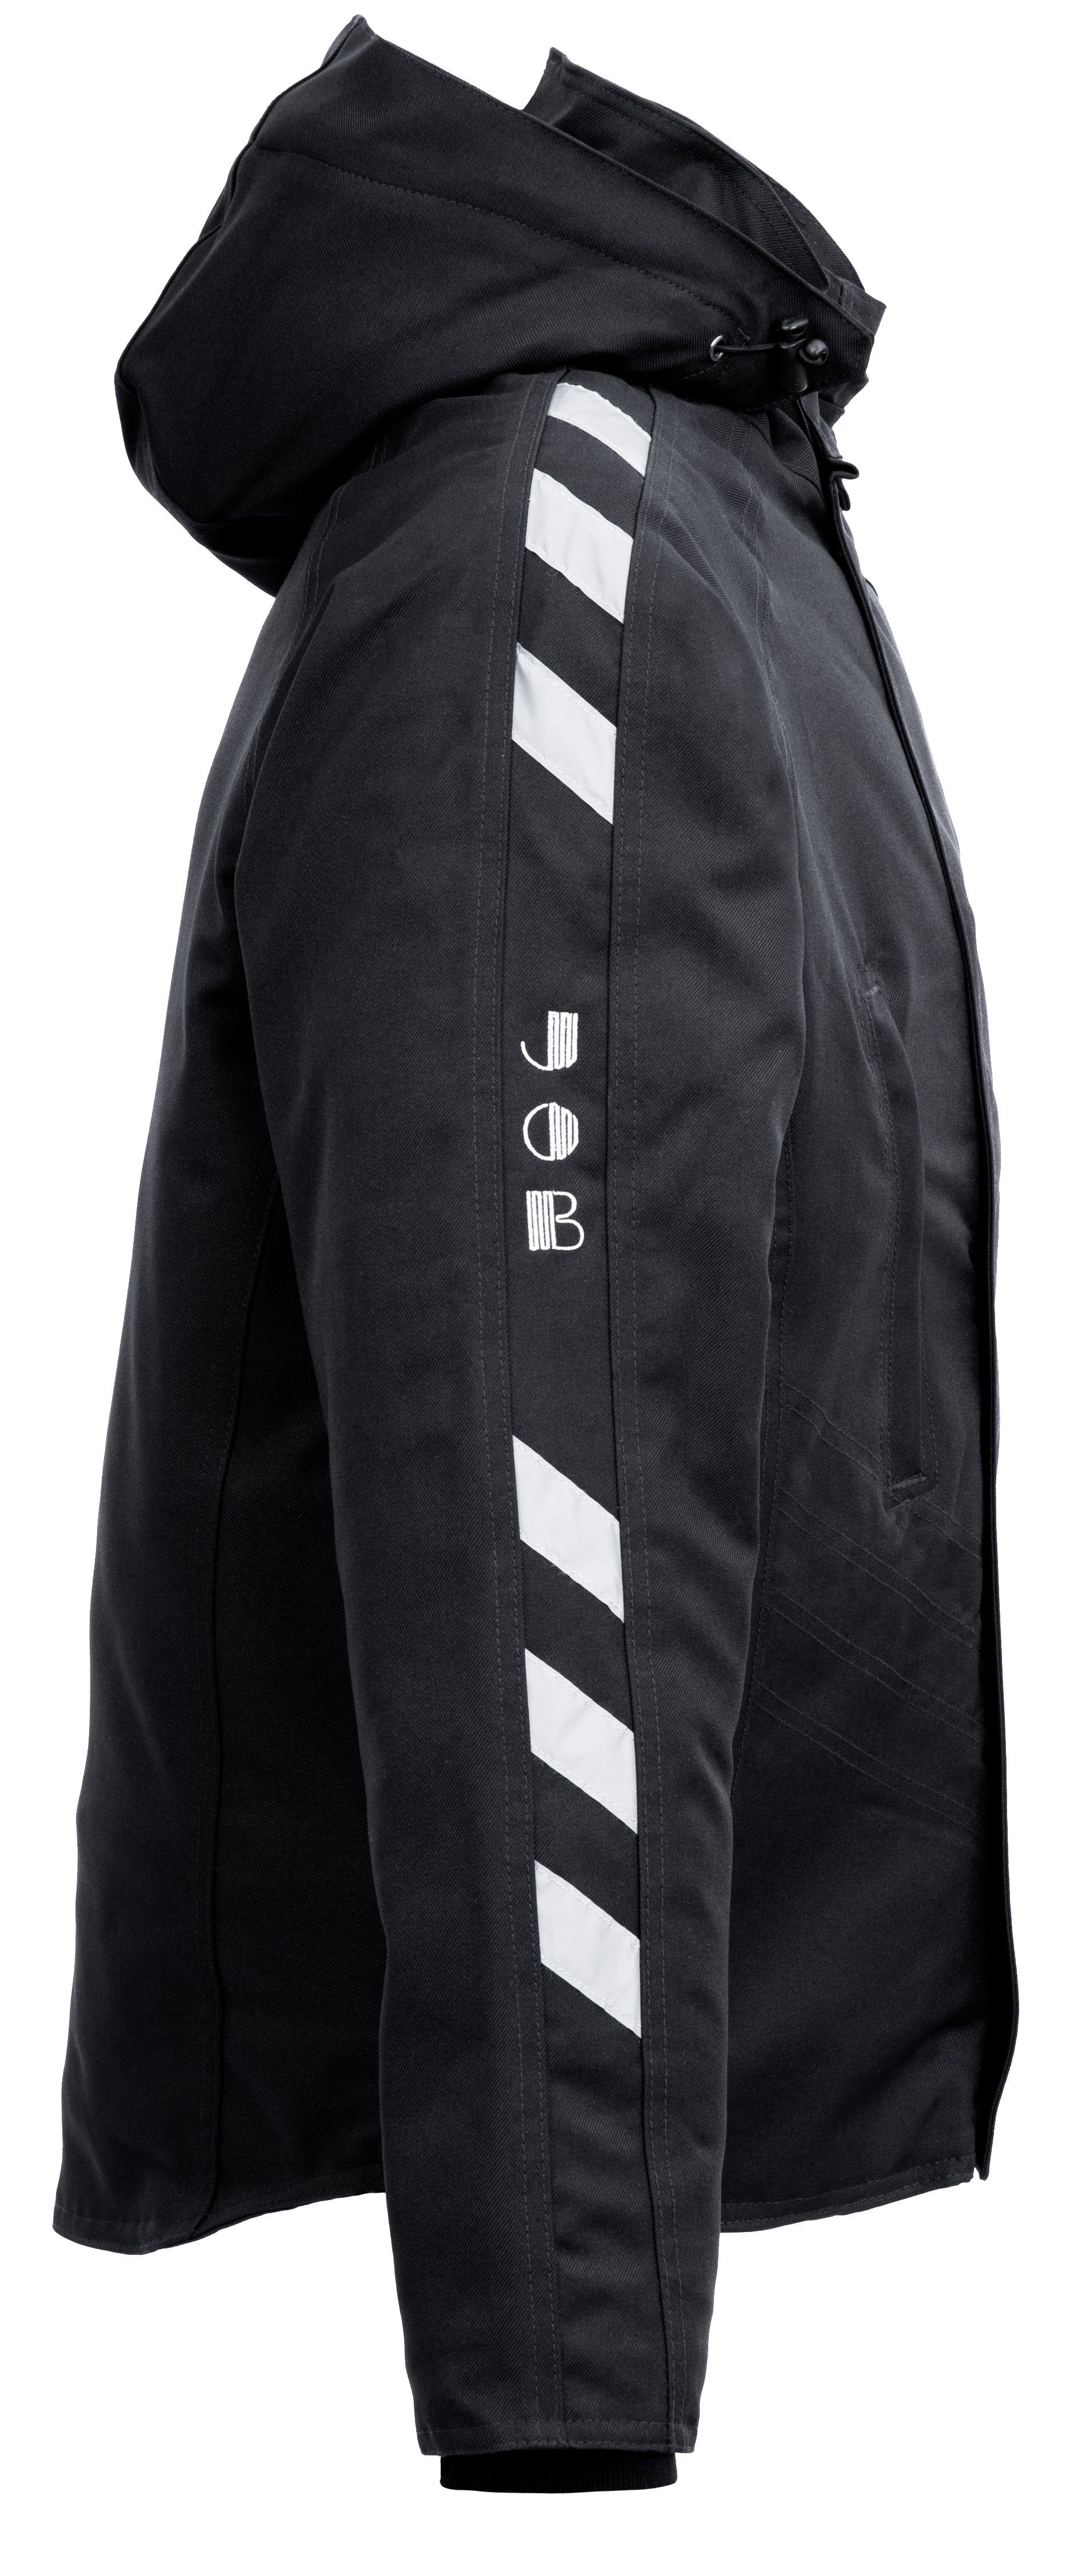 JOB-Tex Winterjacke Arbeitsjacke Zimmerer-Jacke schwarz JOB